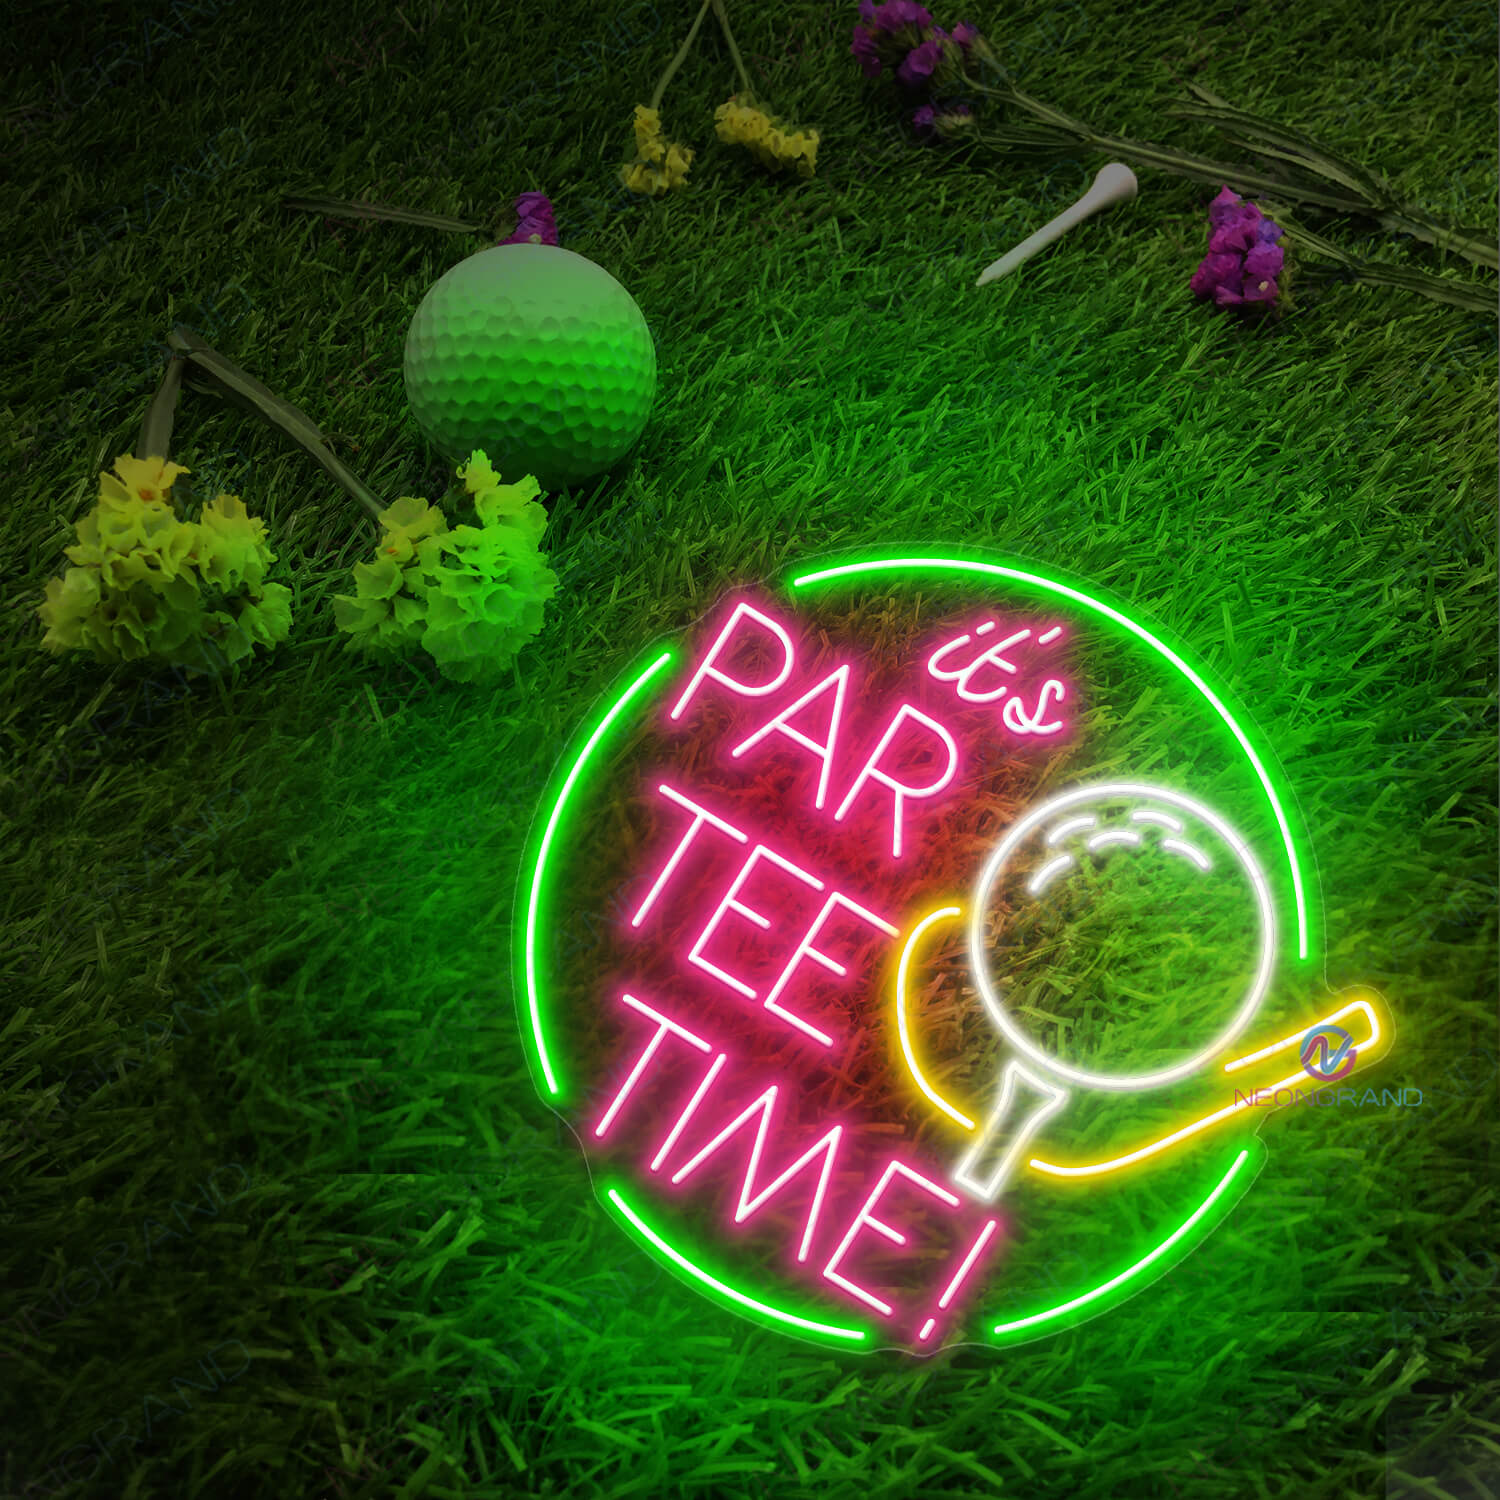 Top Golf Las Vegas & Graybar Choose Vivid S LED Neon - LED Neon Flex